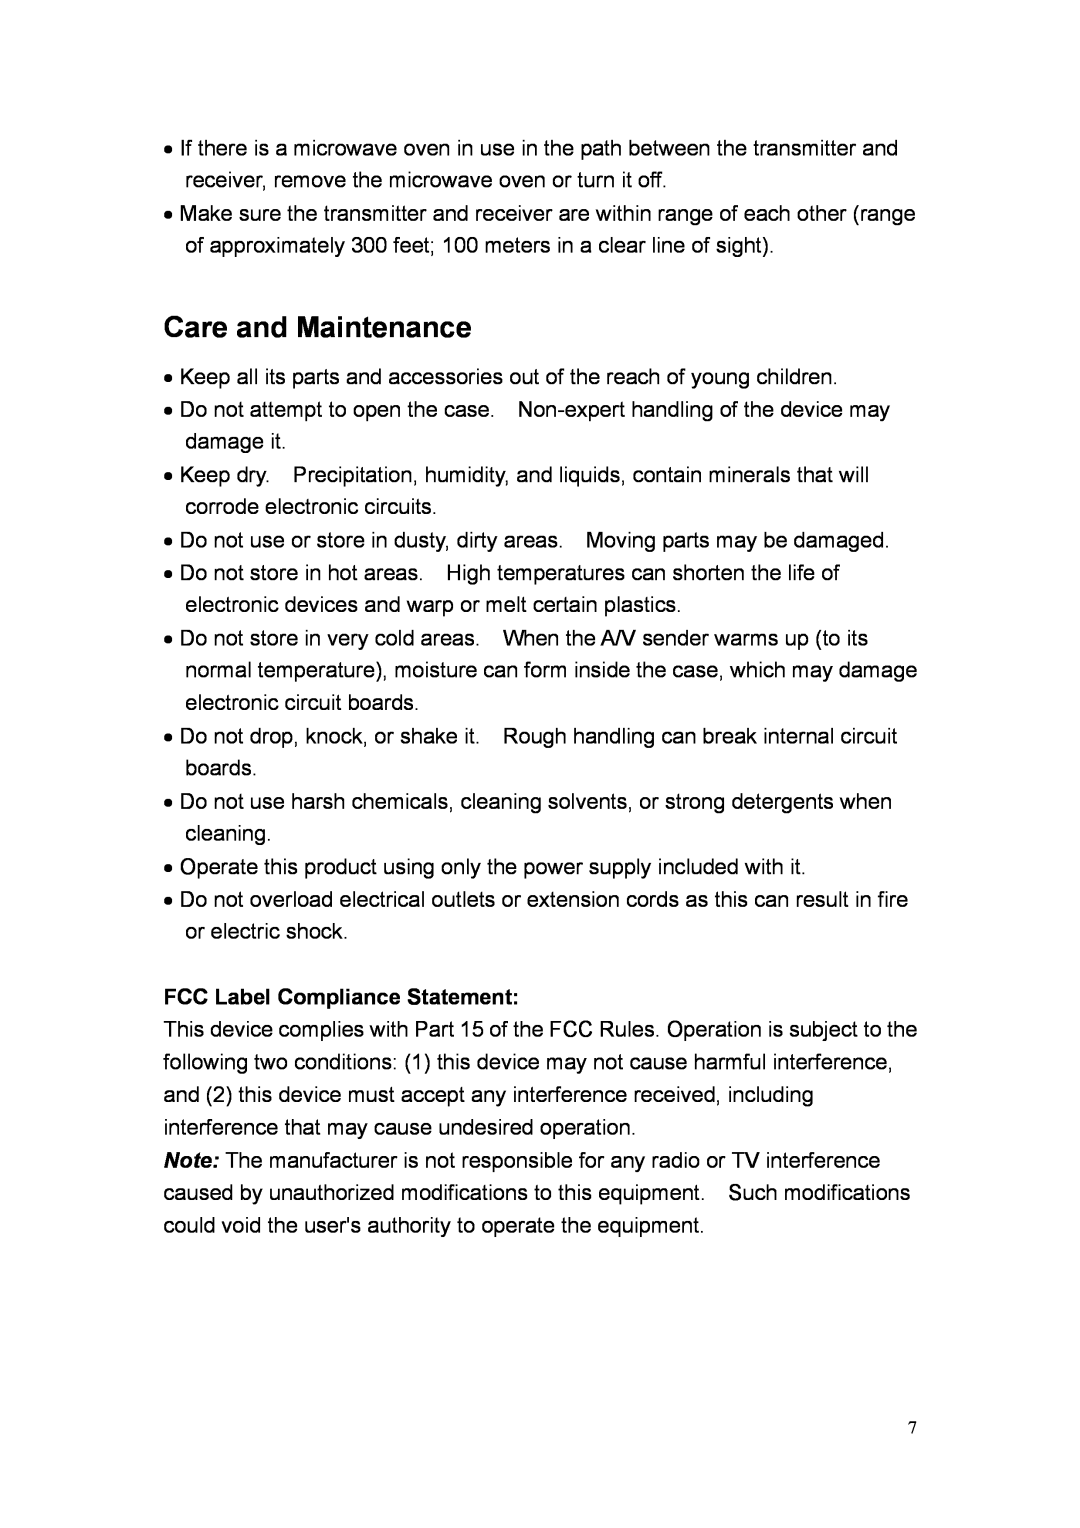 Quatech 2.4GHz user manual Care and Maintenance, FCC Label Compliance Statement 